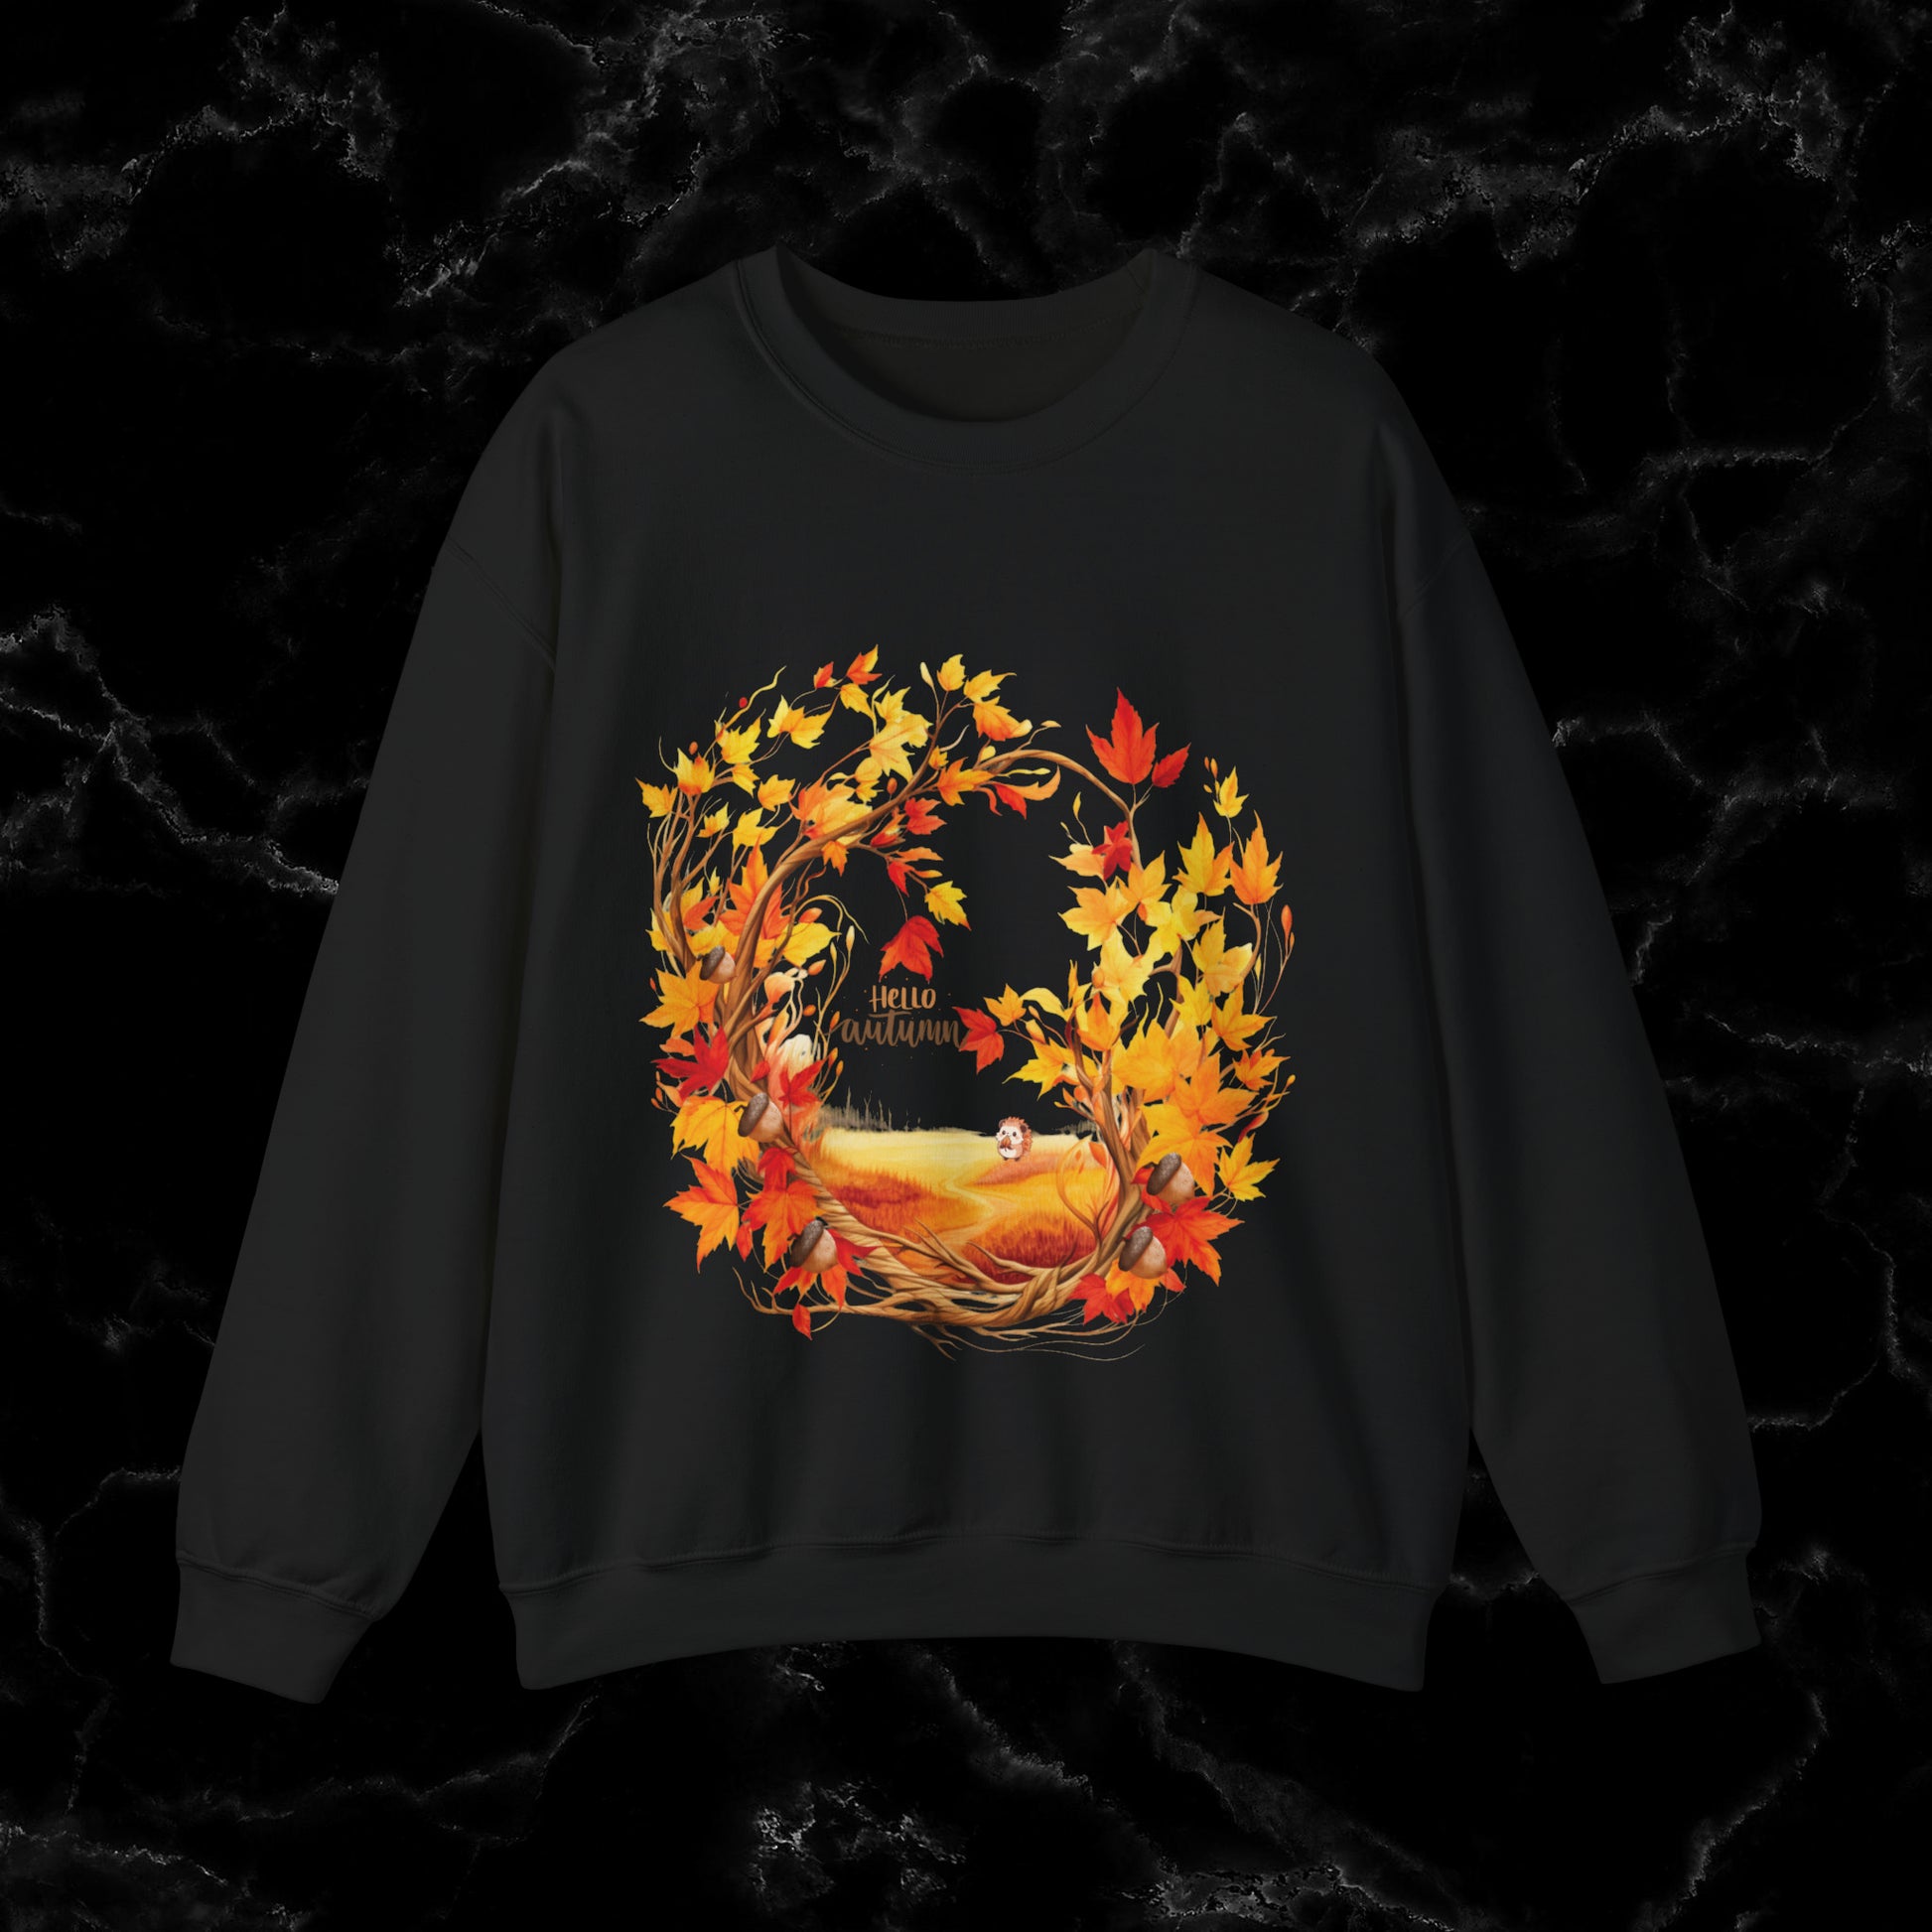 Hello Autumn Sweatshirt | Fall Design - Fall Seasonal Sweatshirt - Beauty Of Autumn Sweatshirt S Black 